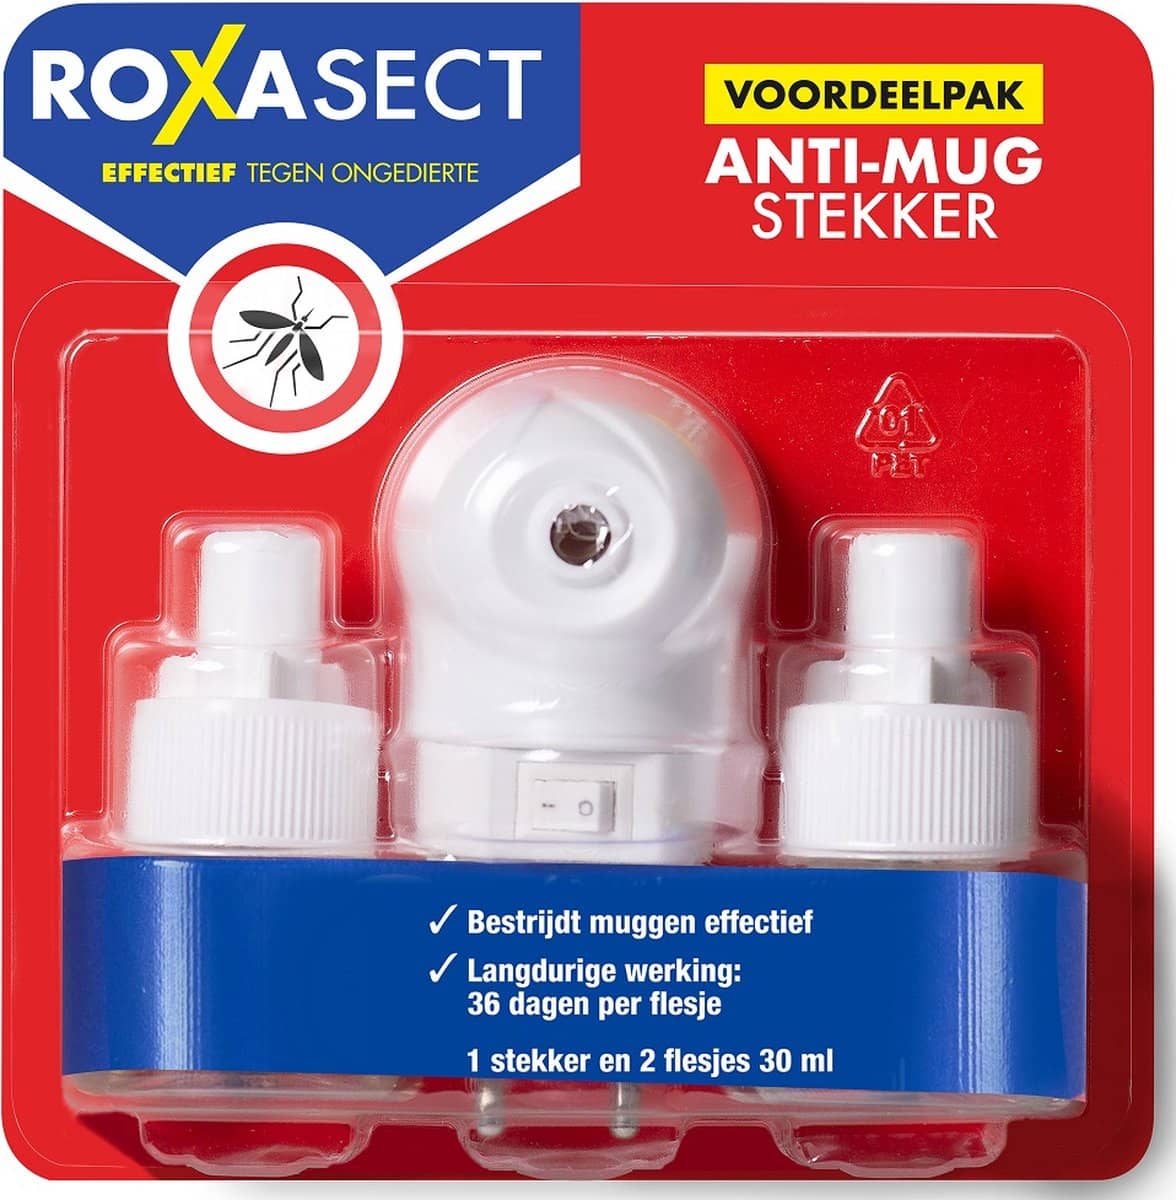 Roxasect Anti-Mug Muggenstekker. Eenvoudig maar effectief